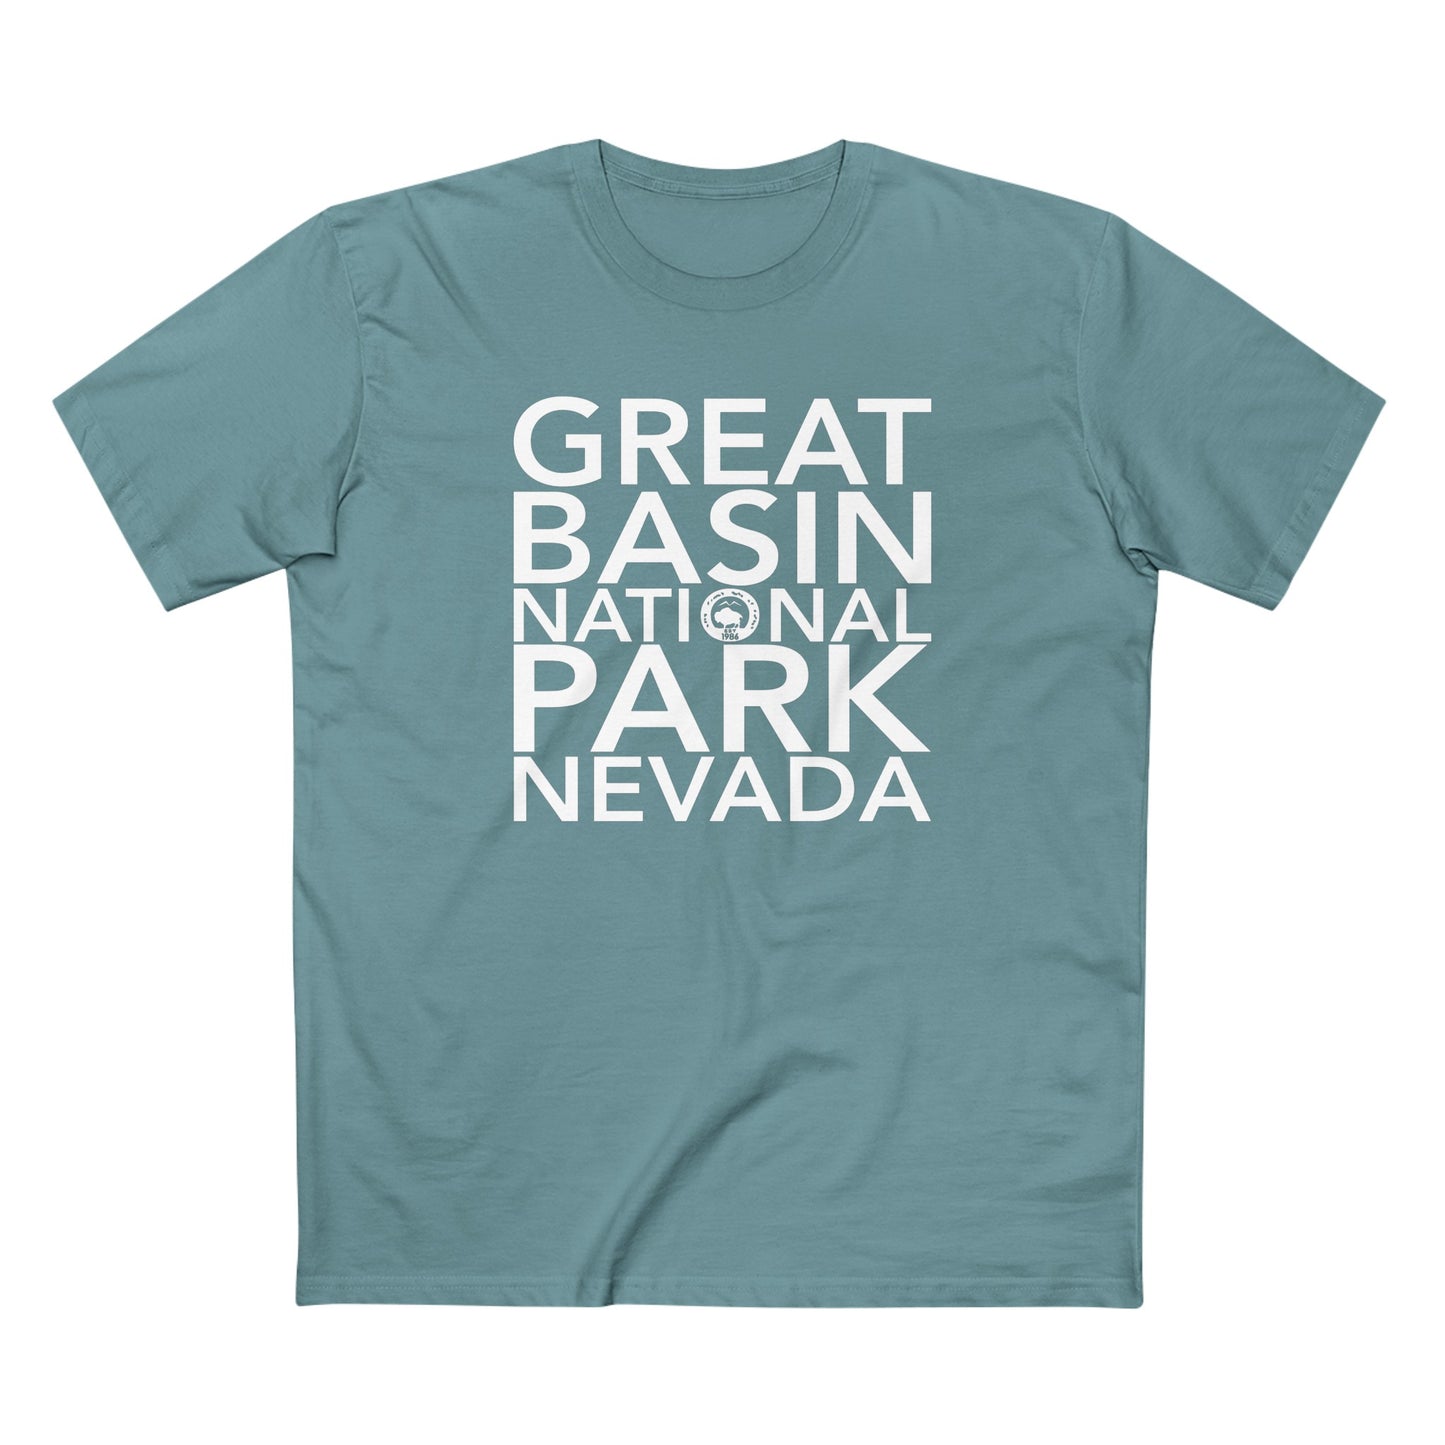 Great Basin National Park T-Shirt Block Text